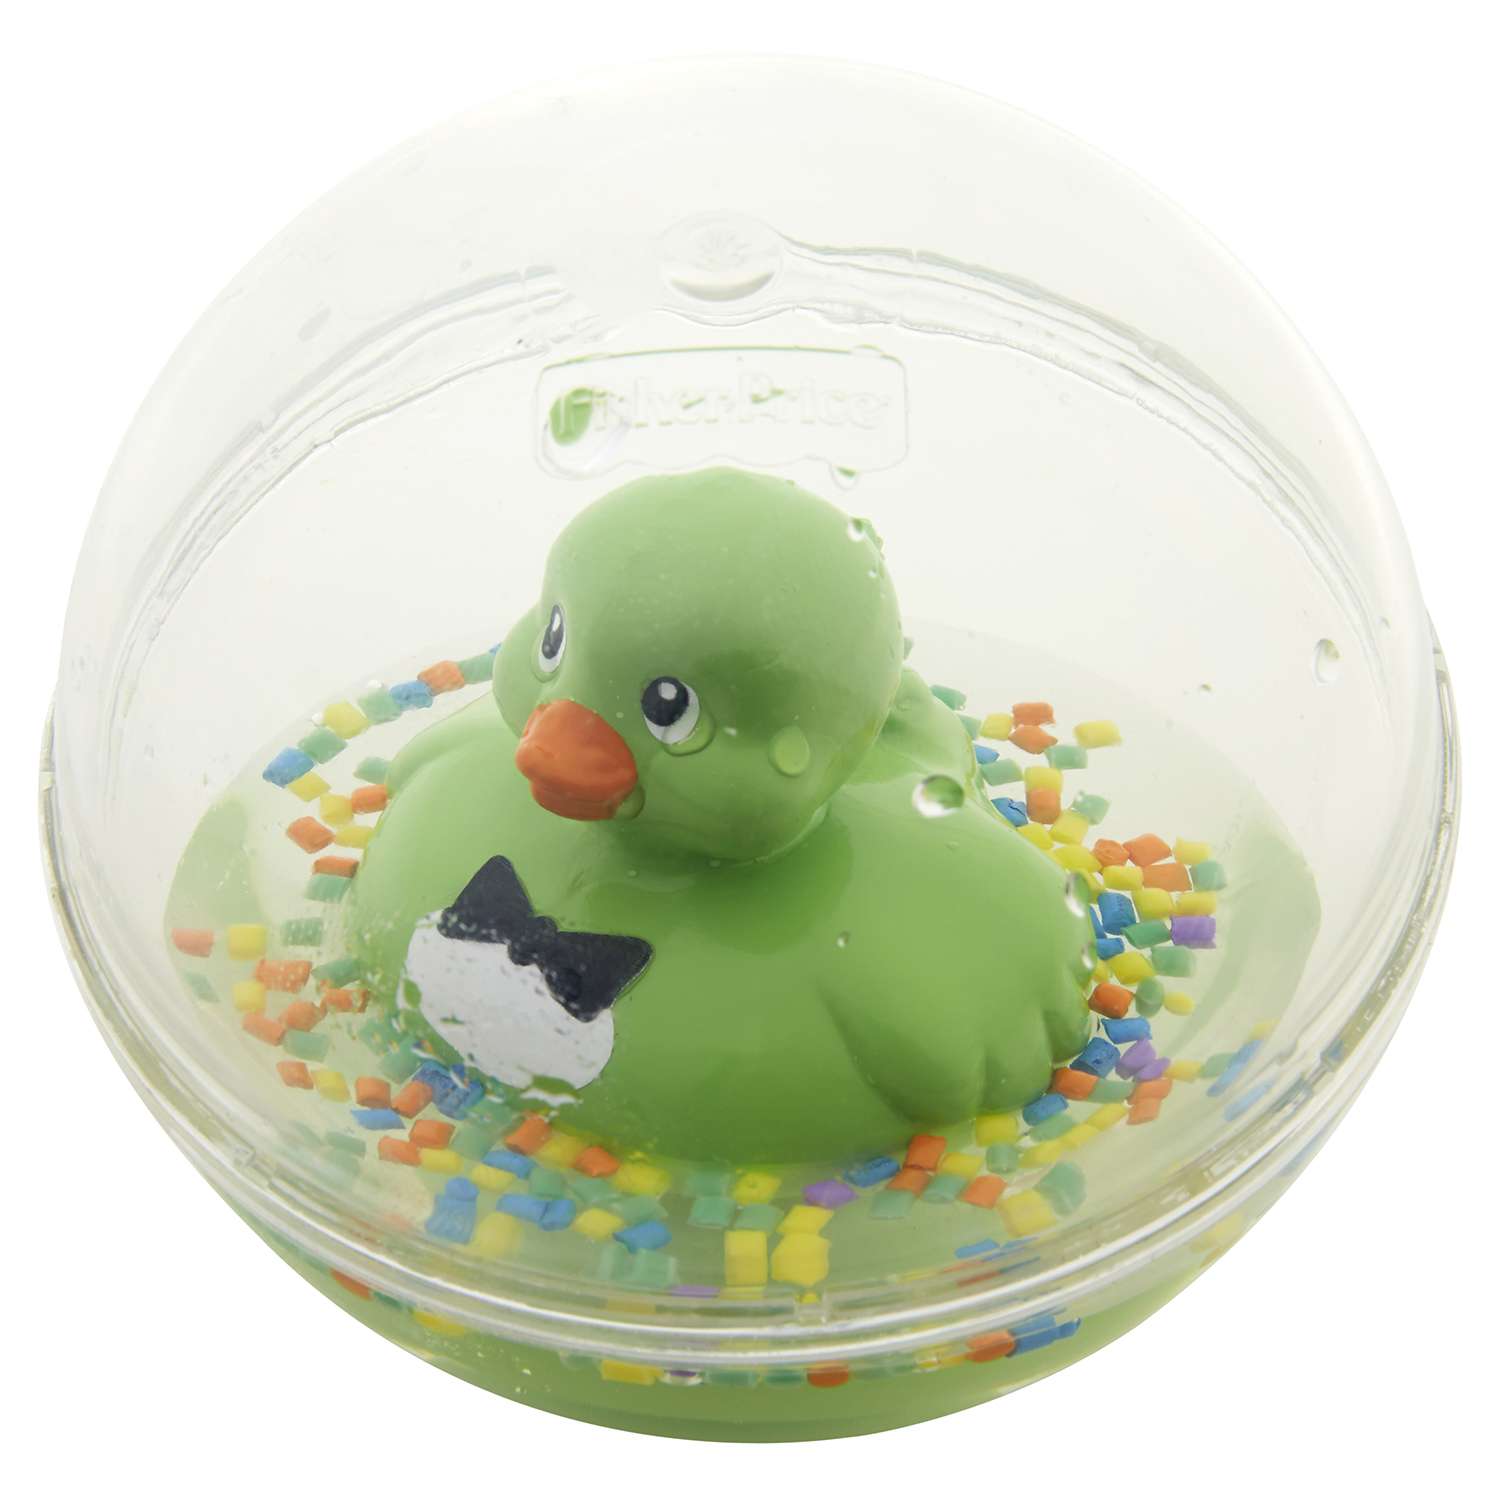 Шар Fisher Price с плавающей игрушкой Утка Зеленая DVH73 - фото 5